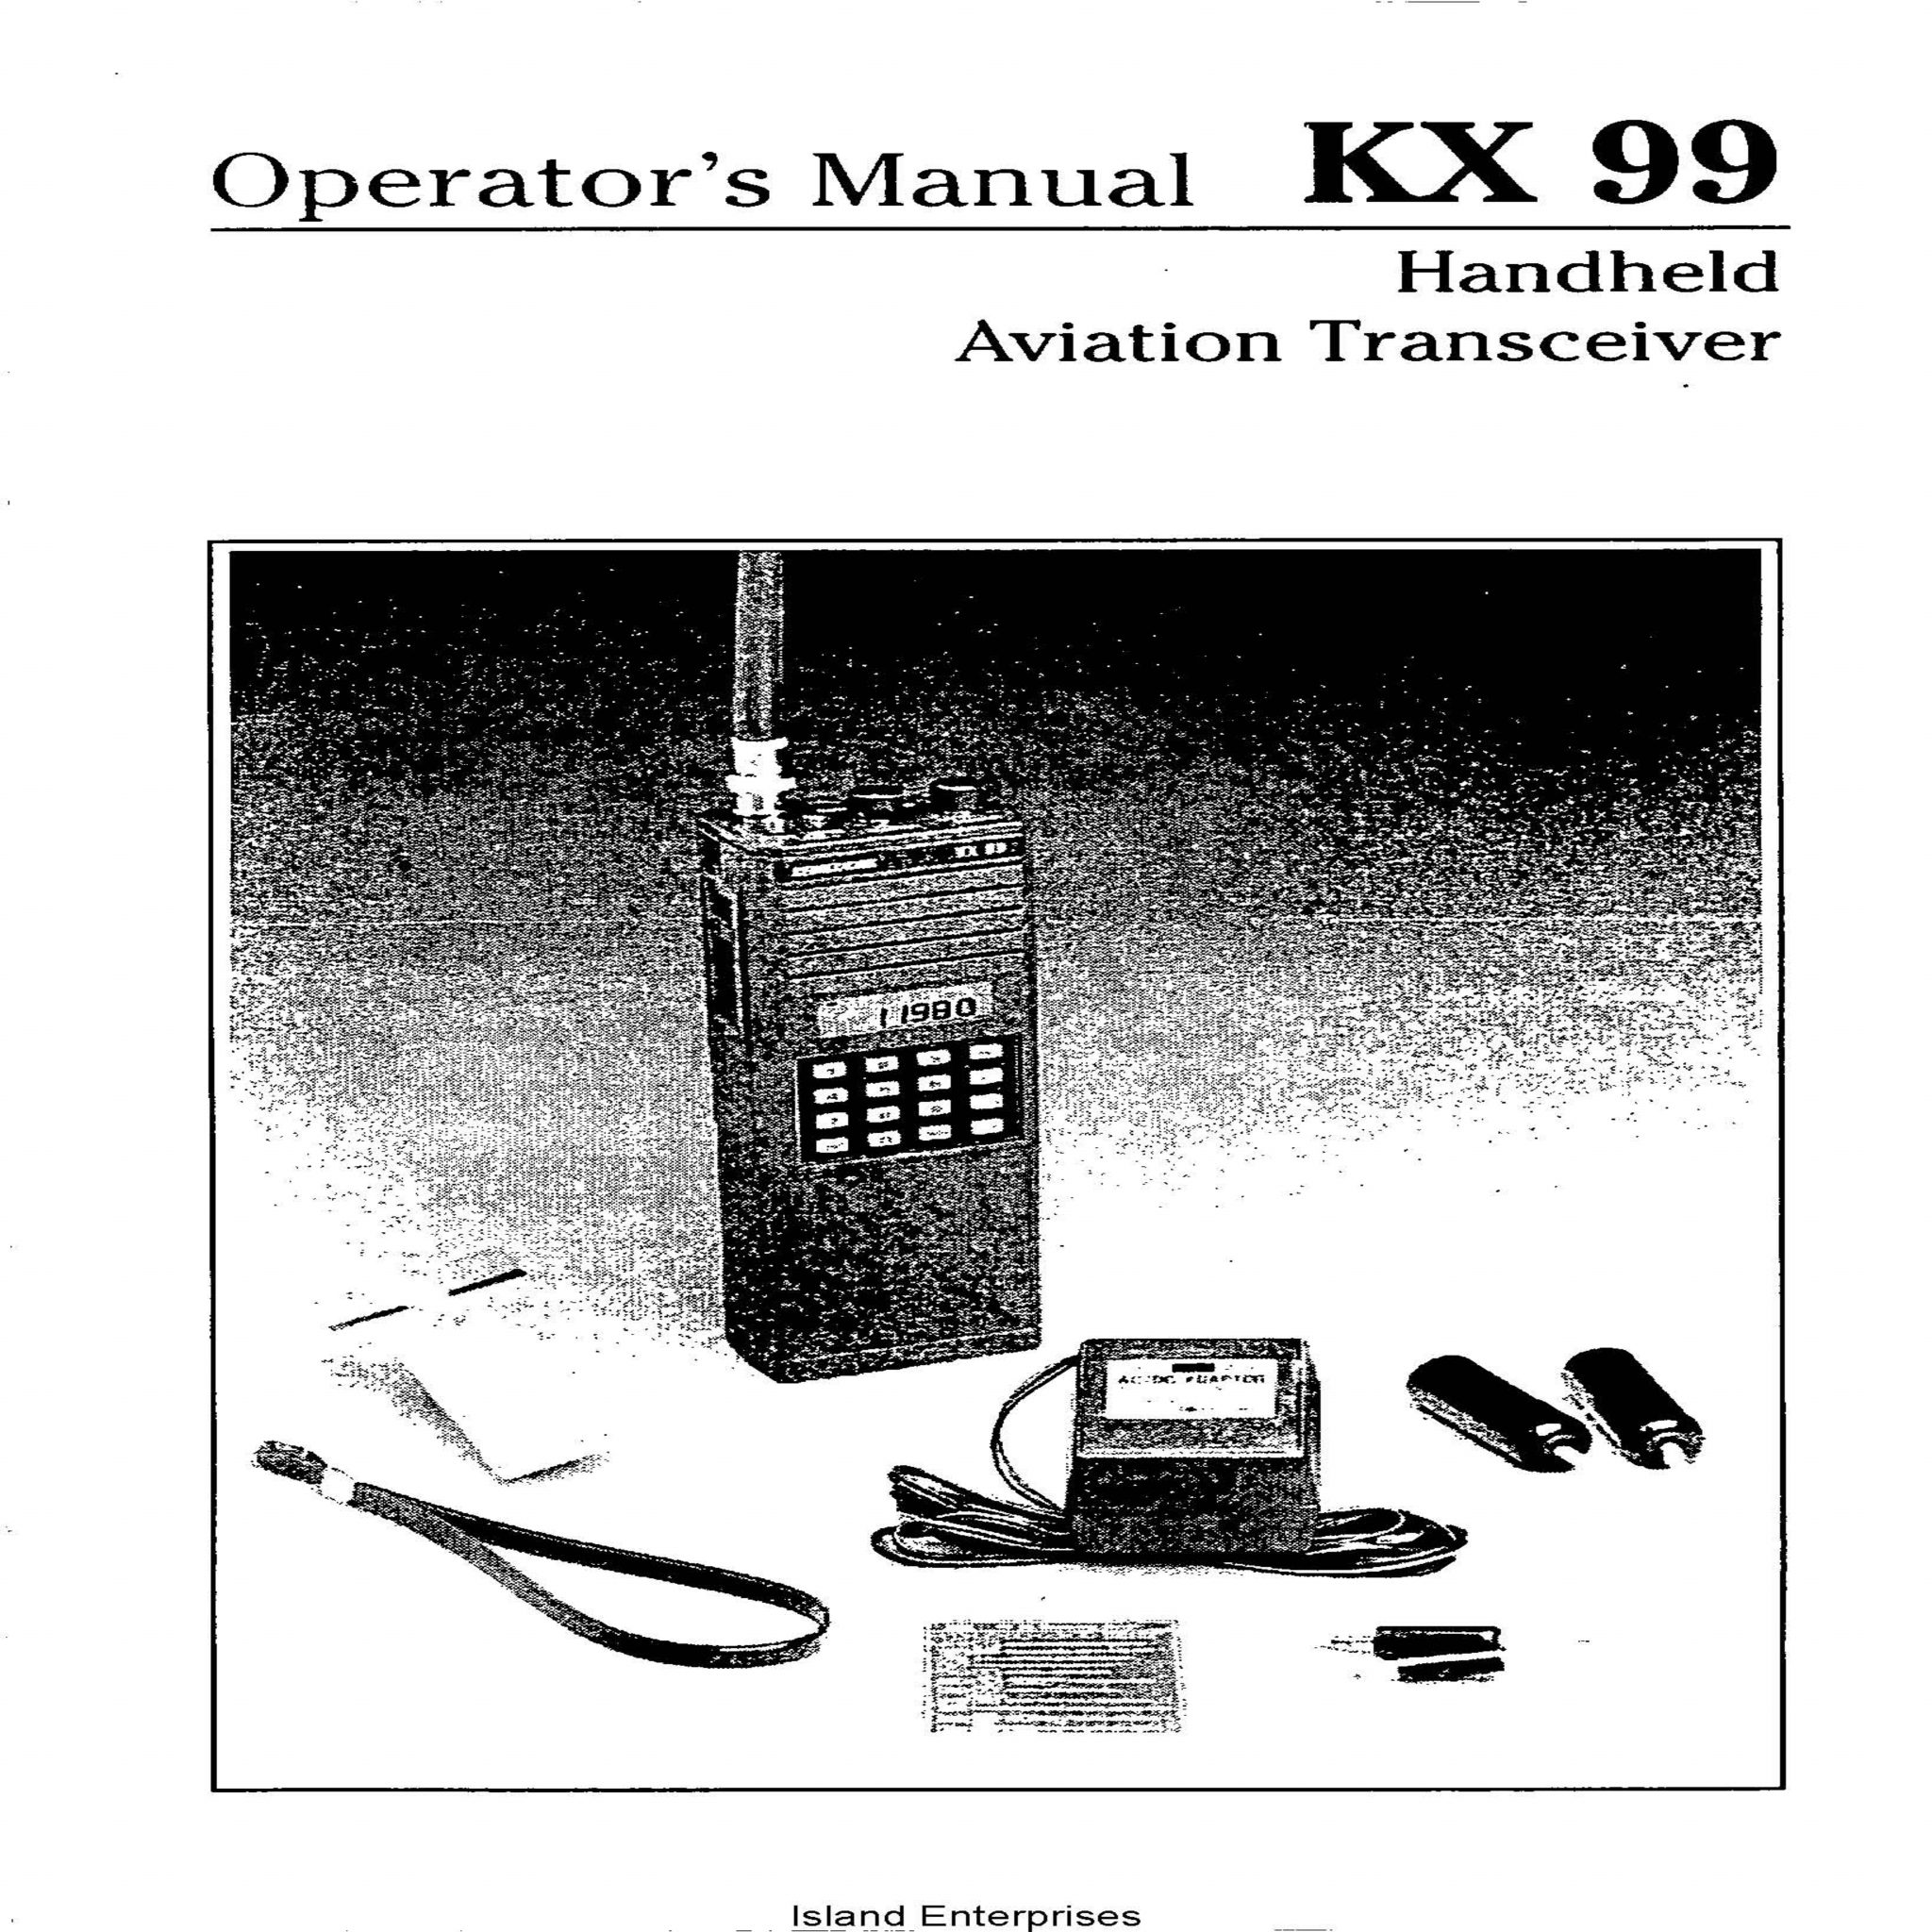 Bendix King KX 99 Handheld Aviation Transceiver Operator's Manual 006